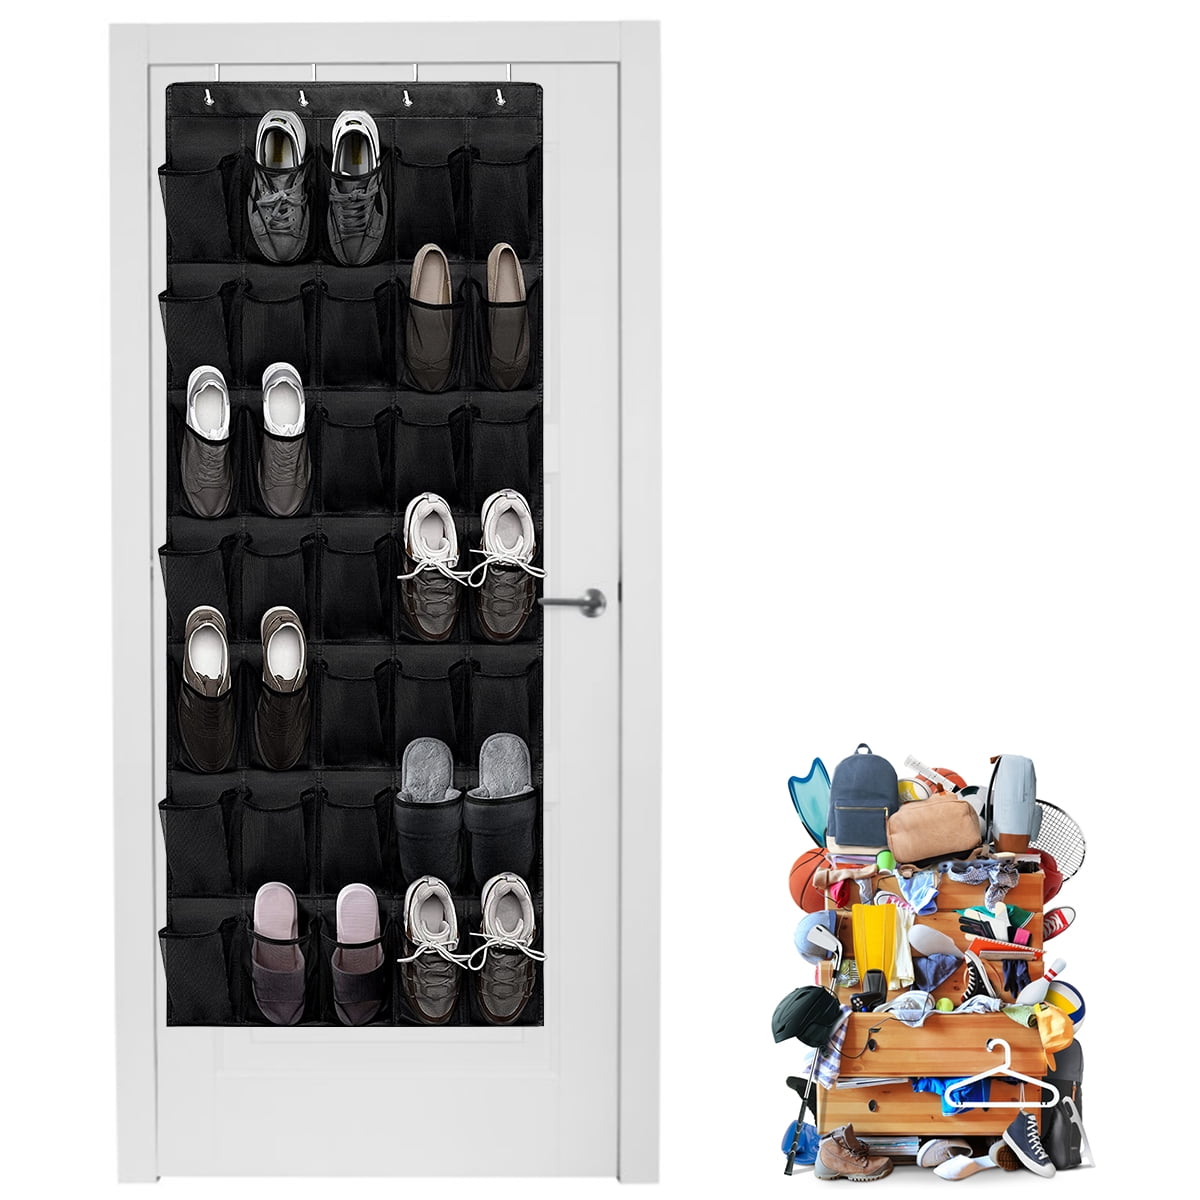 Tidy Zebra Sturdy Hanging Shoe Rack Closet Organizer, 20 Shoe Shelves + 6 Pockets for Boot & Purse Storage, Best Shoe Shelf Holder for Bedroom, RV